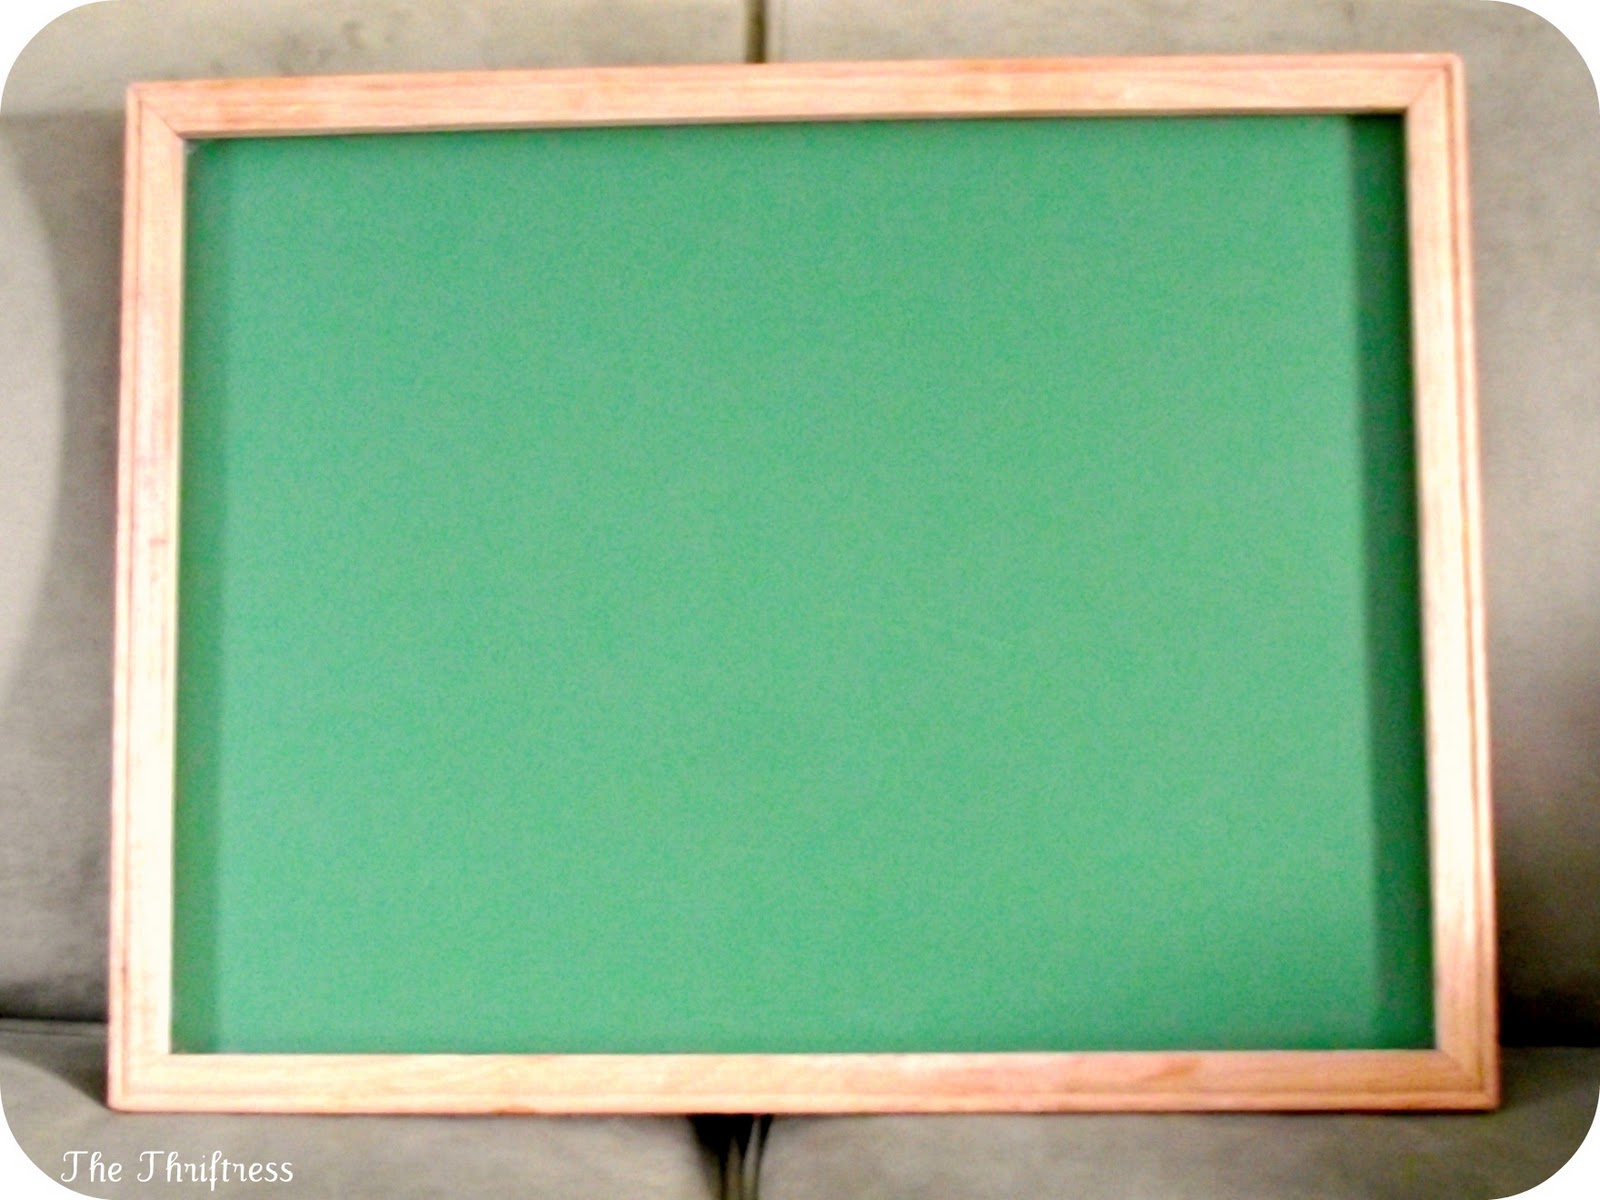 The Thriftress: A Green Chalkboard Makover